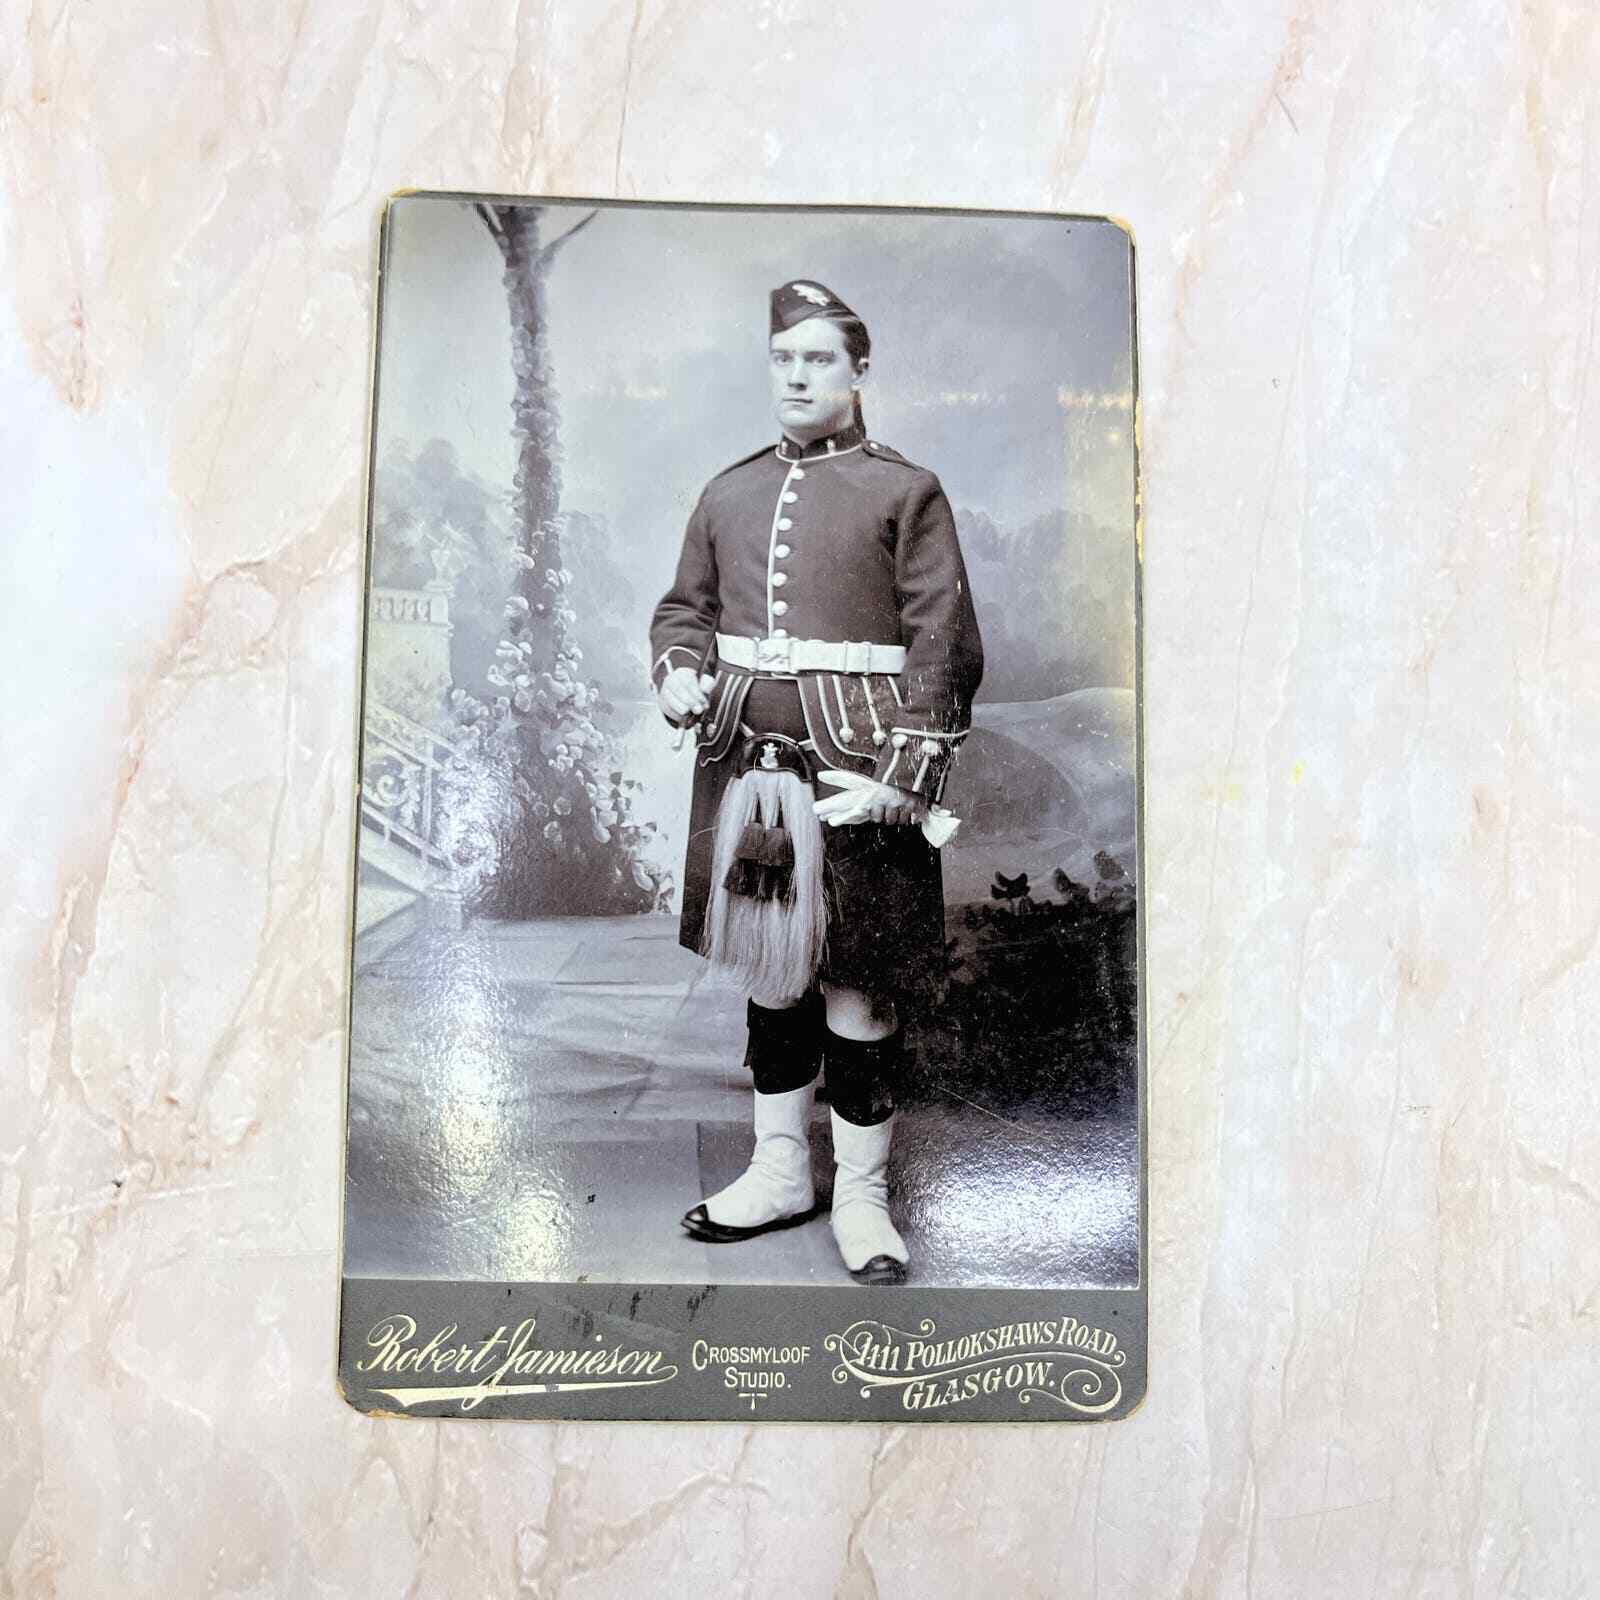 1880s Scottish Highlander Cabinet Card Photo Crossmyloof Studio Glasgow TF5-L3